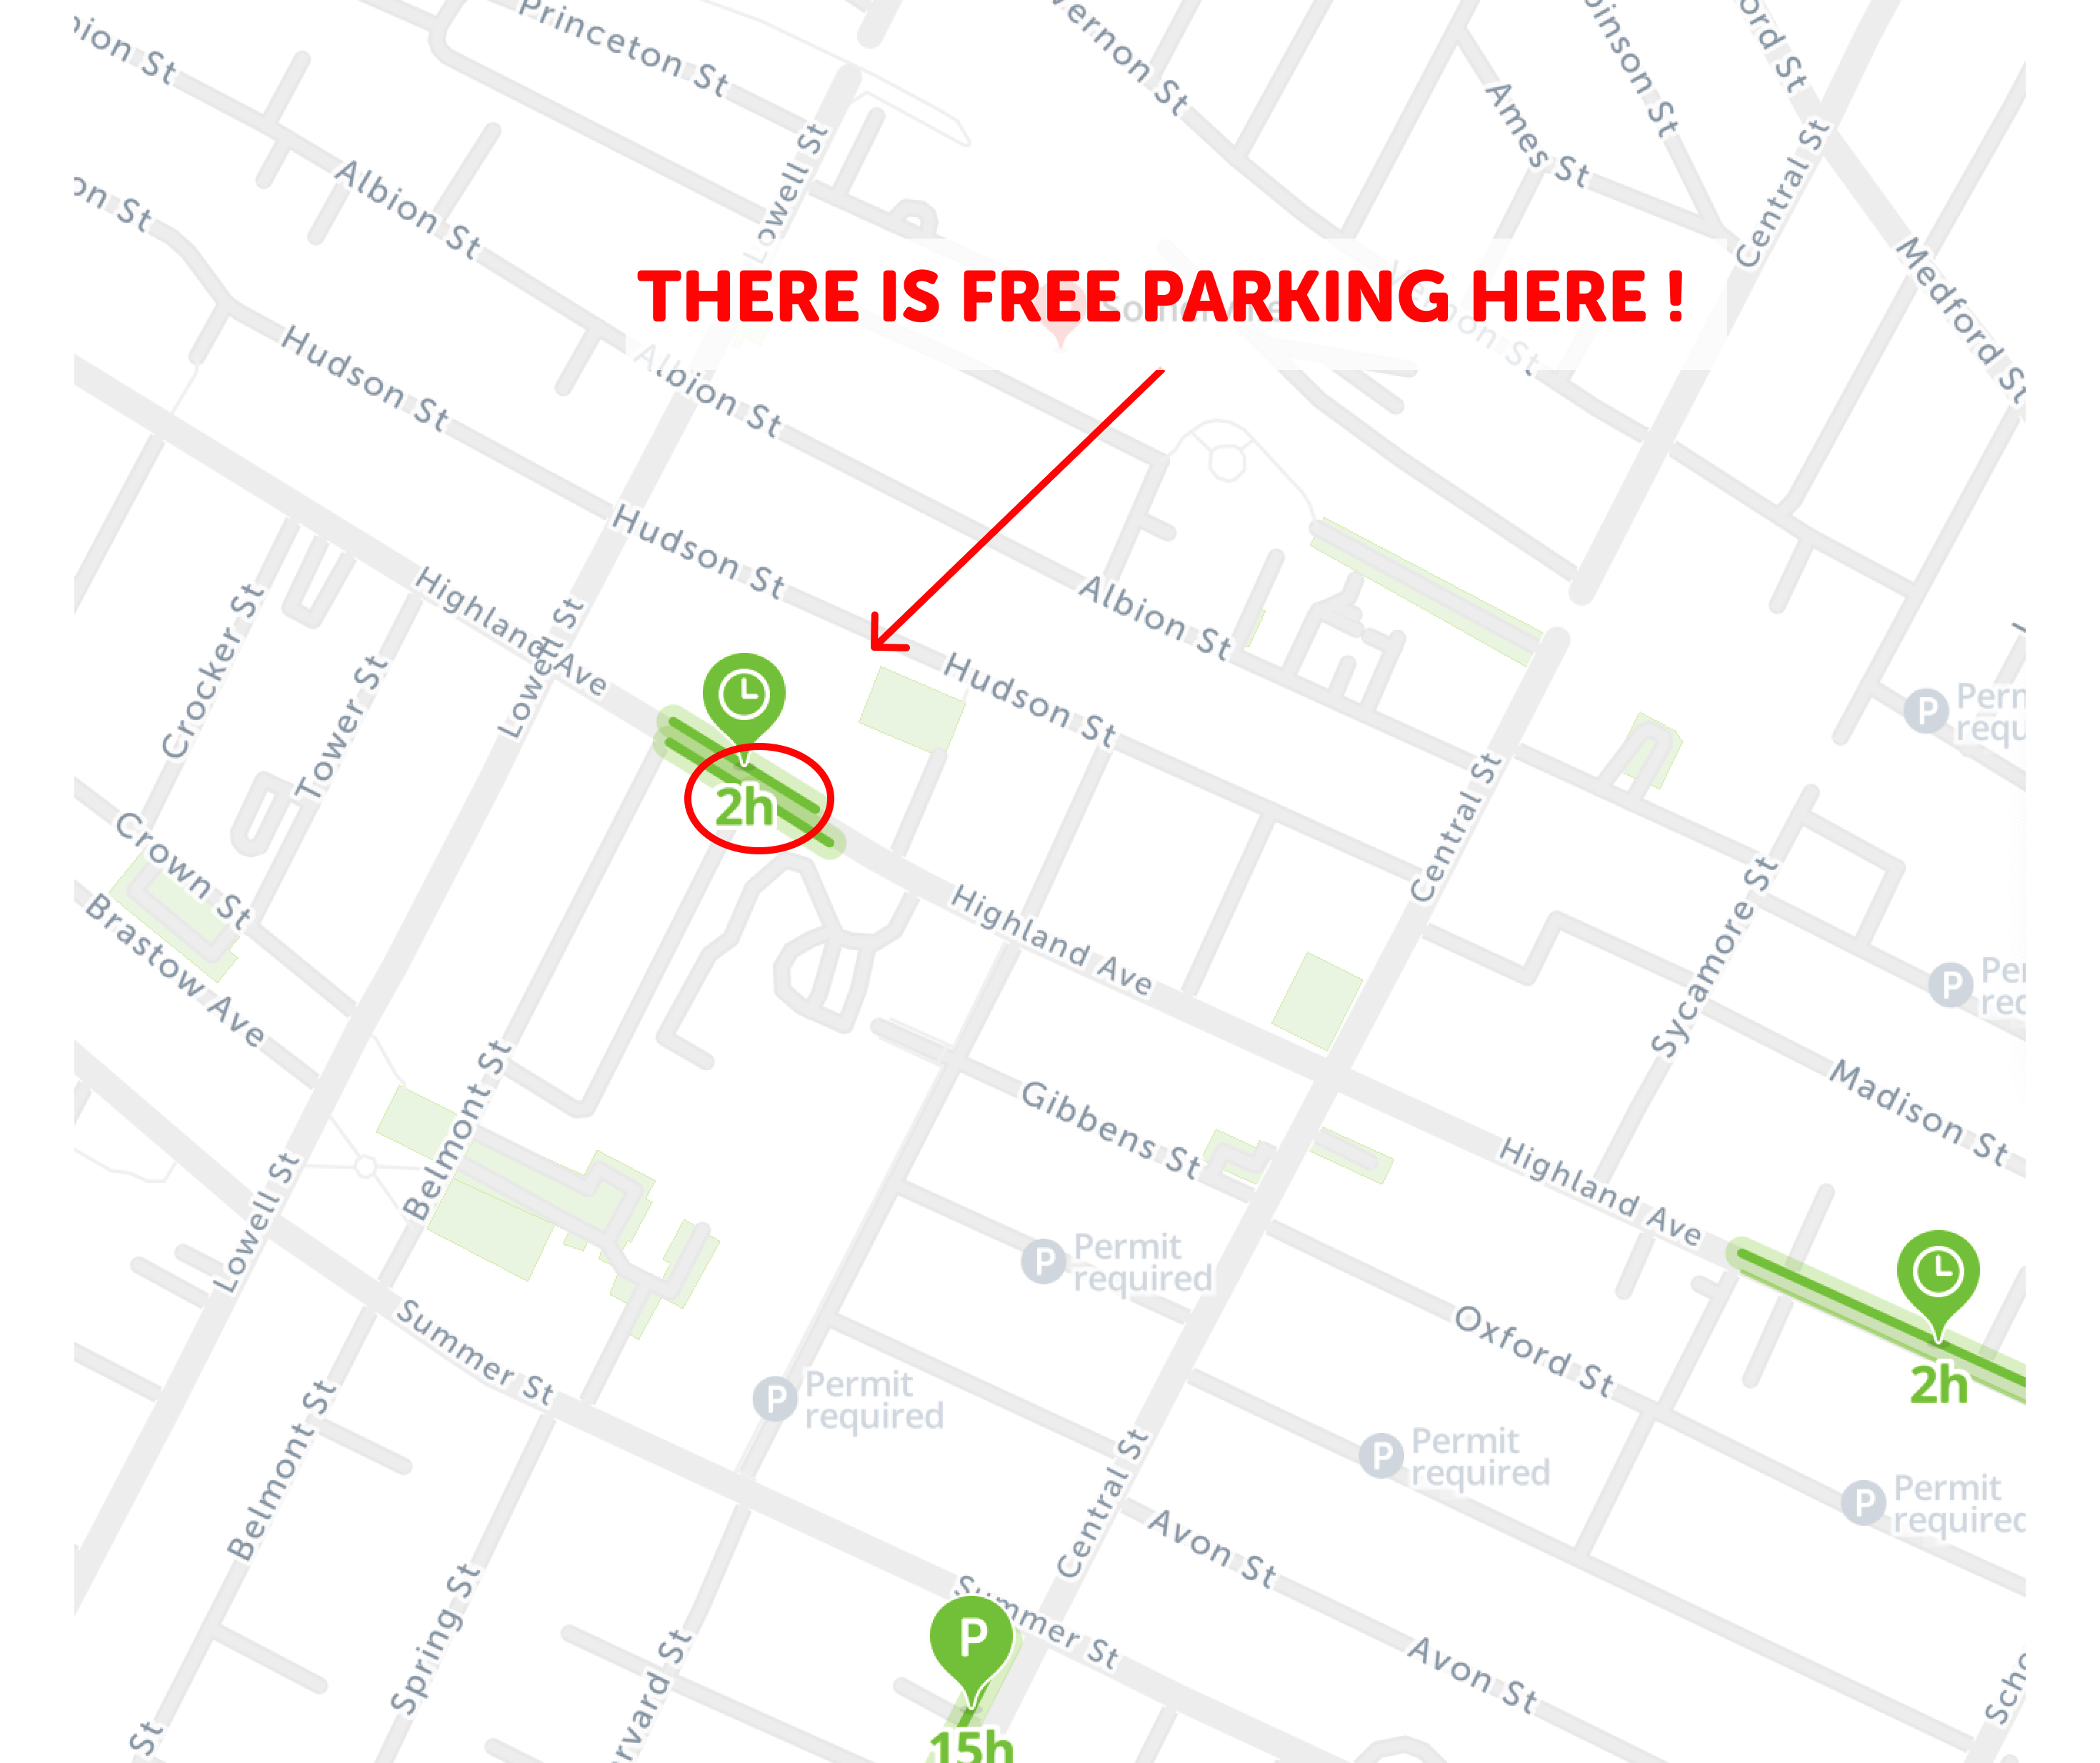 map of free parking in Somerville - SpotAngels